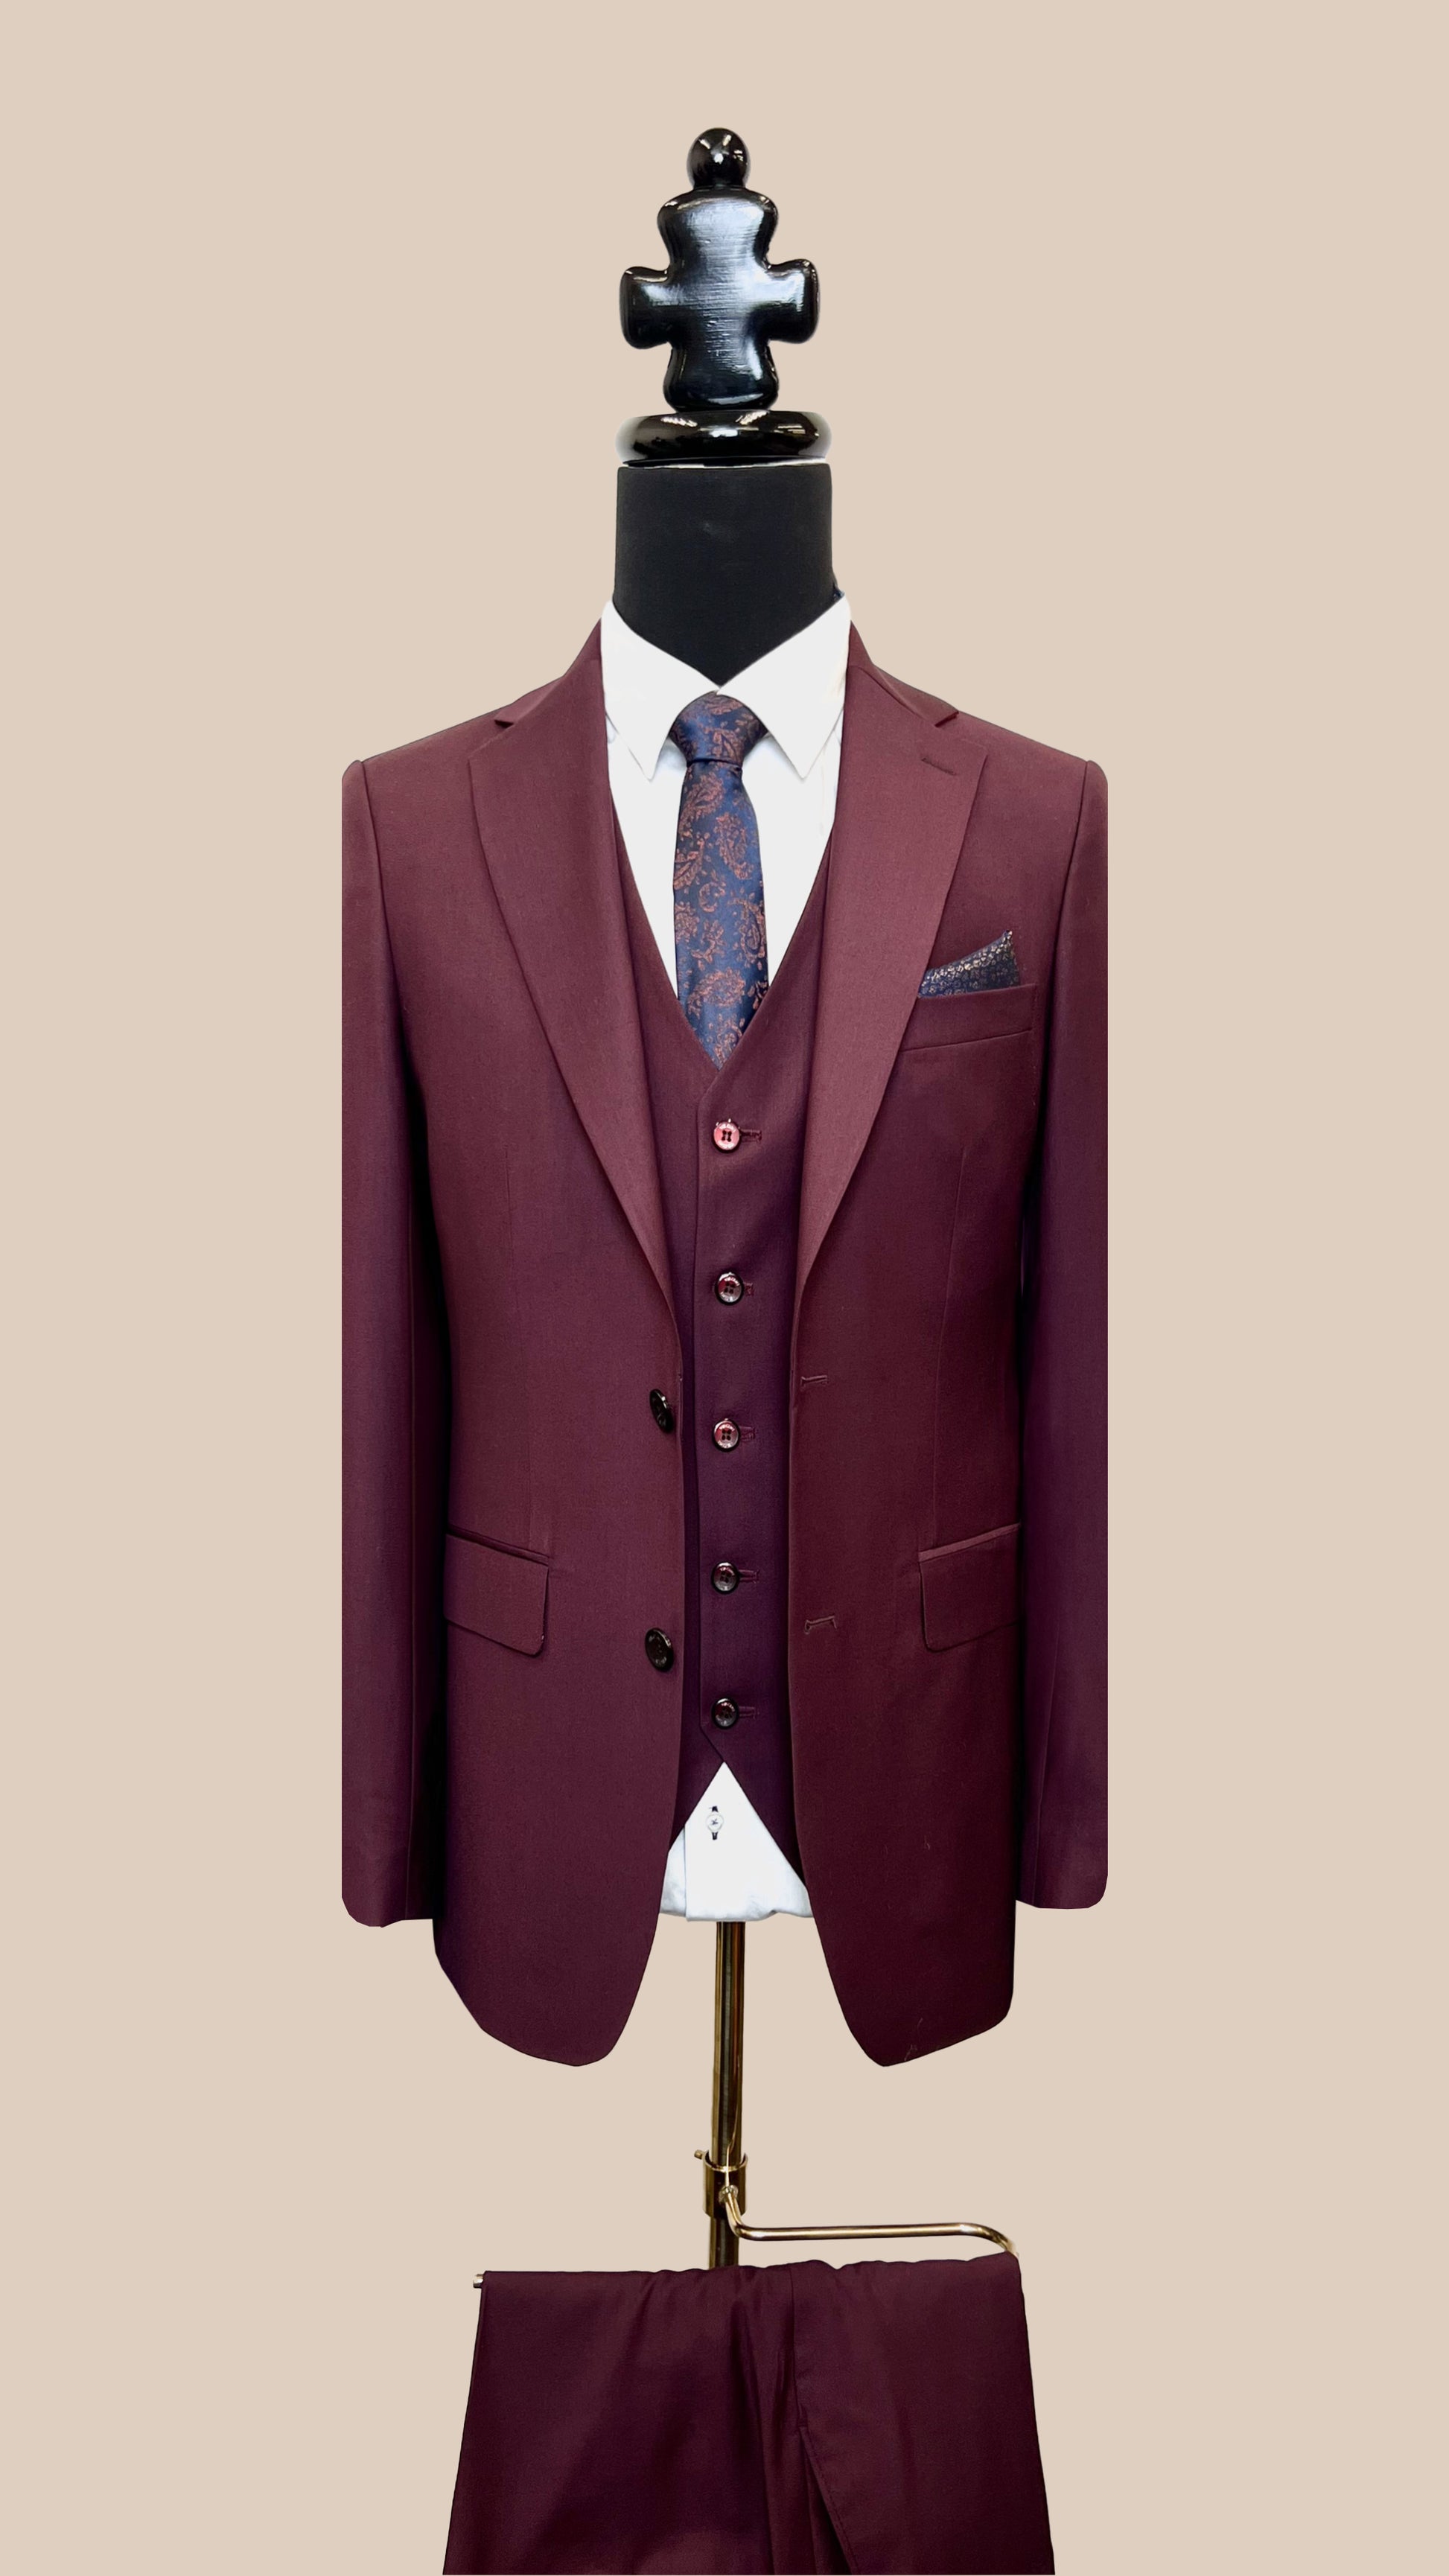 Vercini Premium Burgundy 3-Piece Men's Suit with Patterned Lining SUITS 3 Piece Suits Vercini